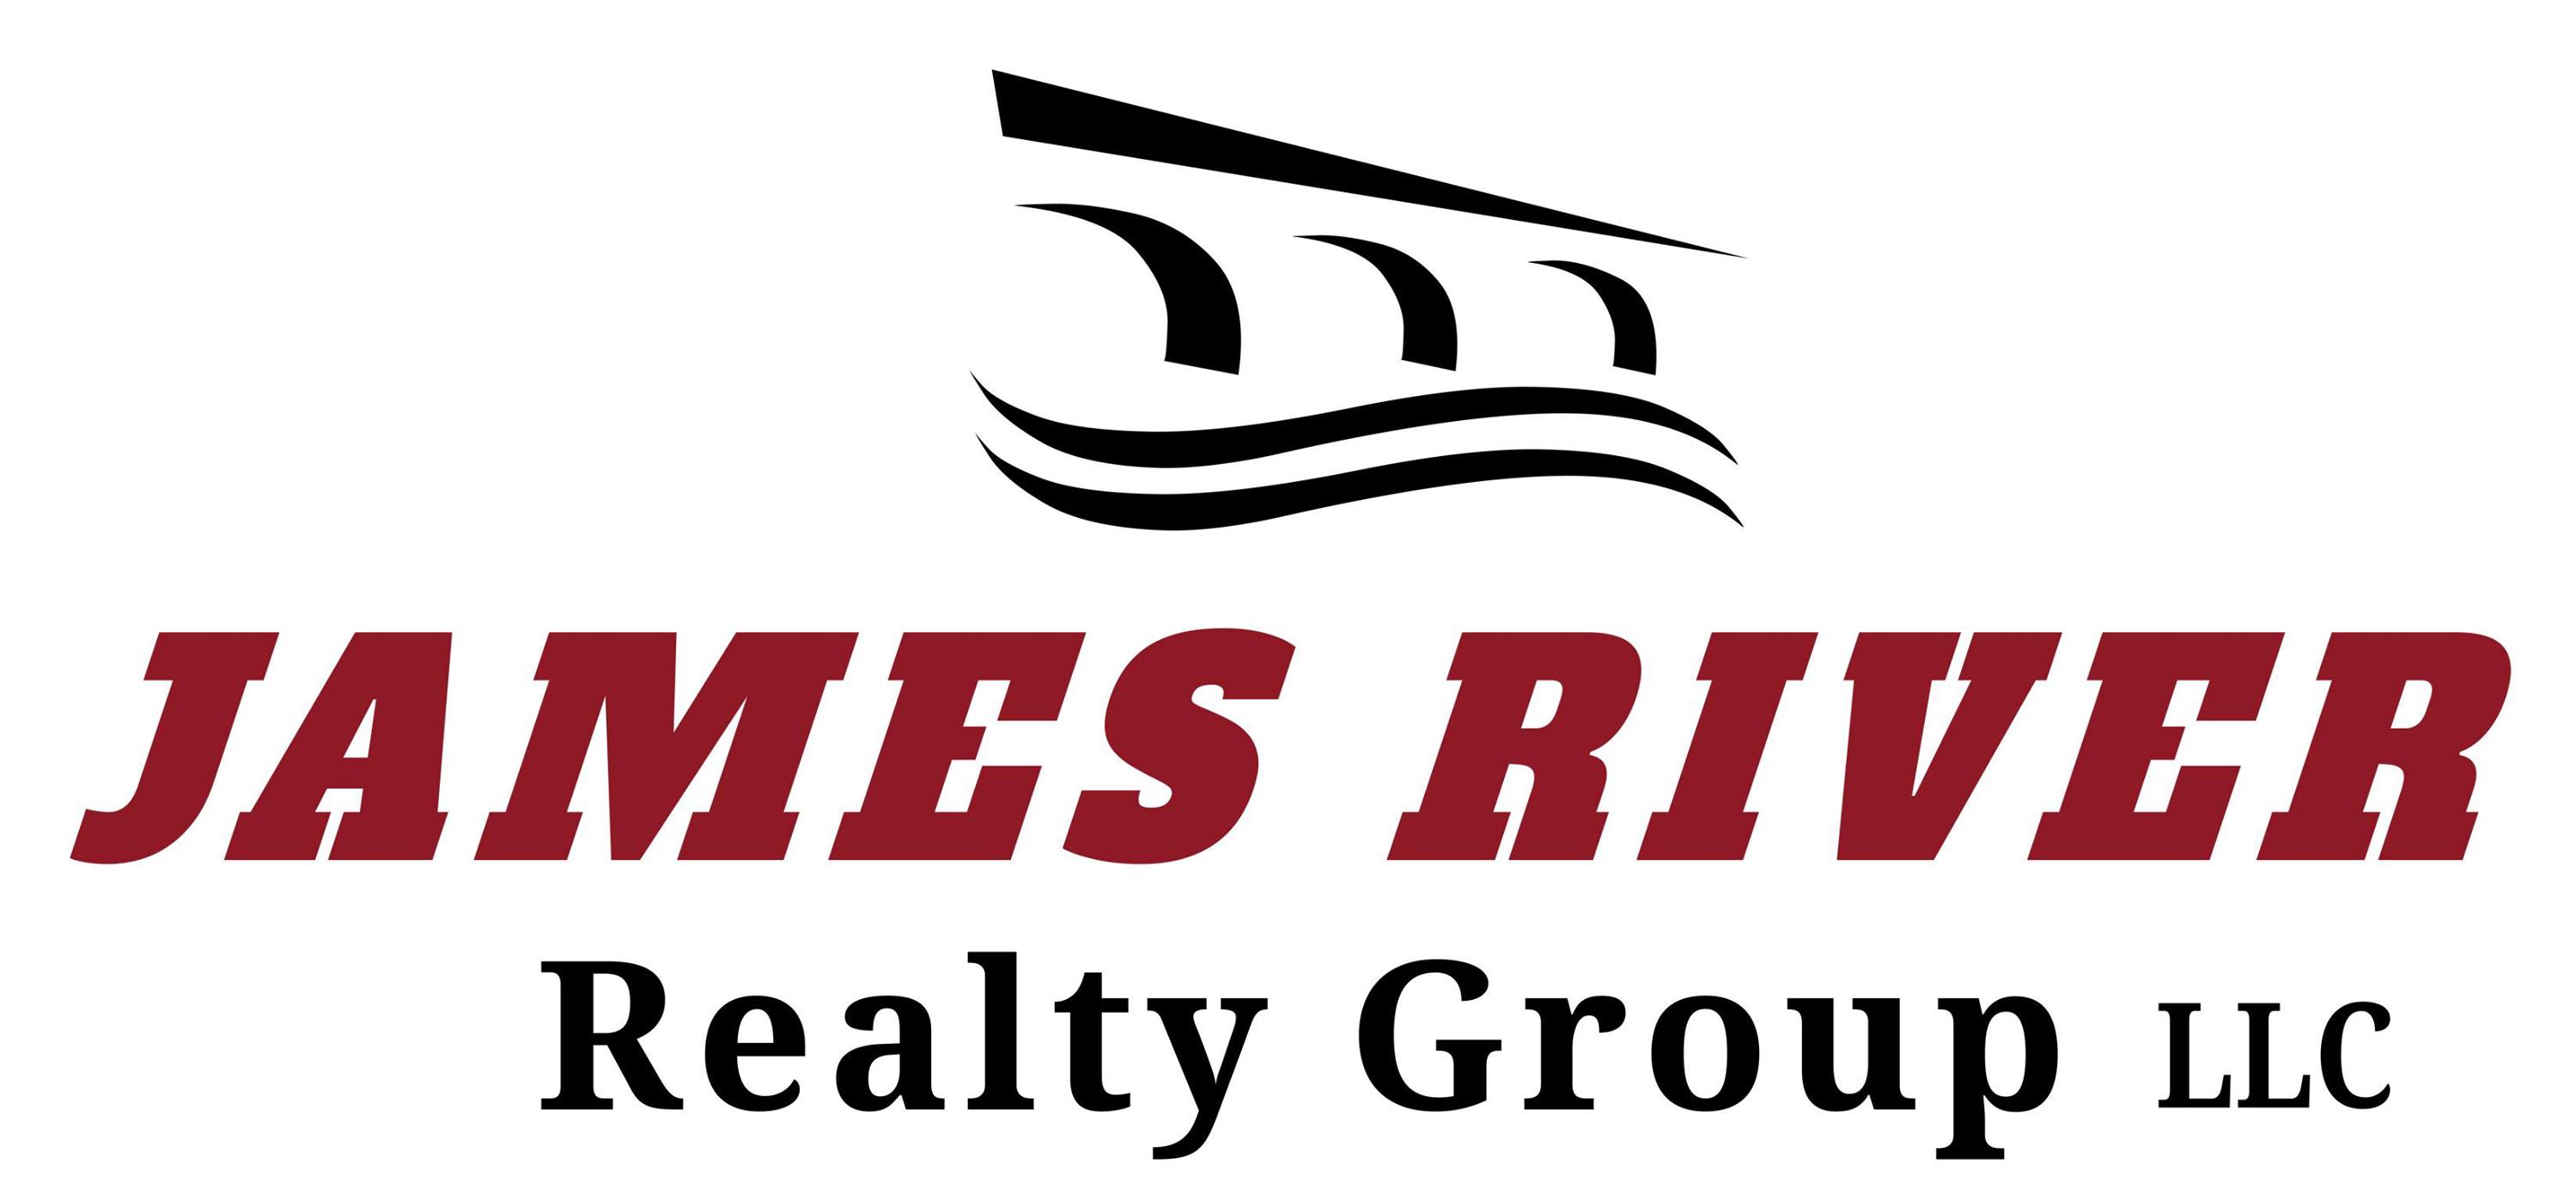 James River Realty Group, LLC